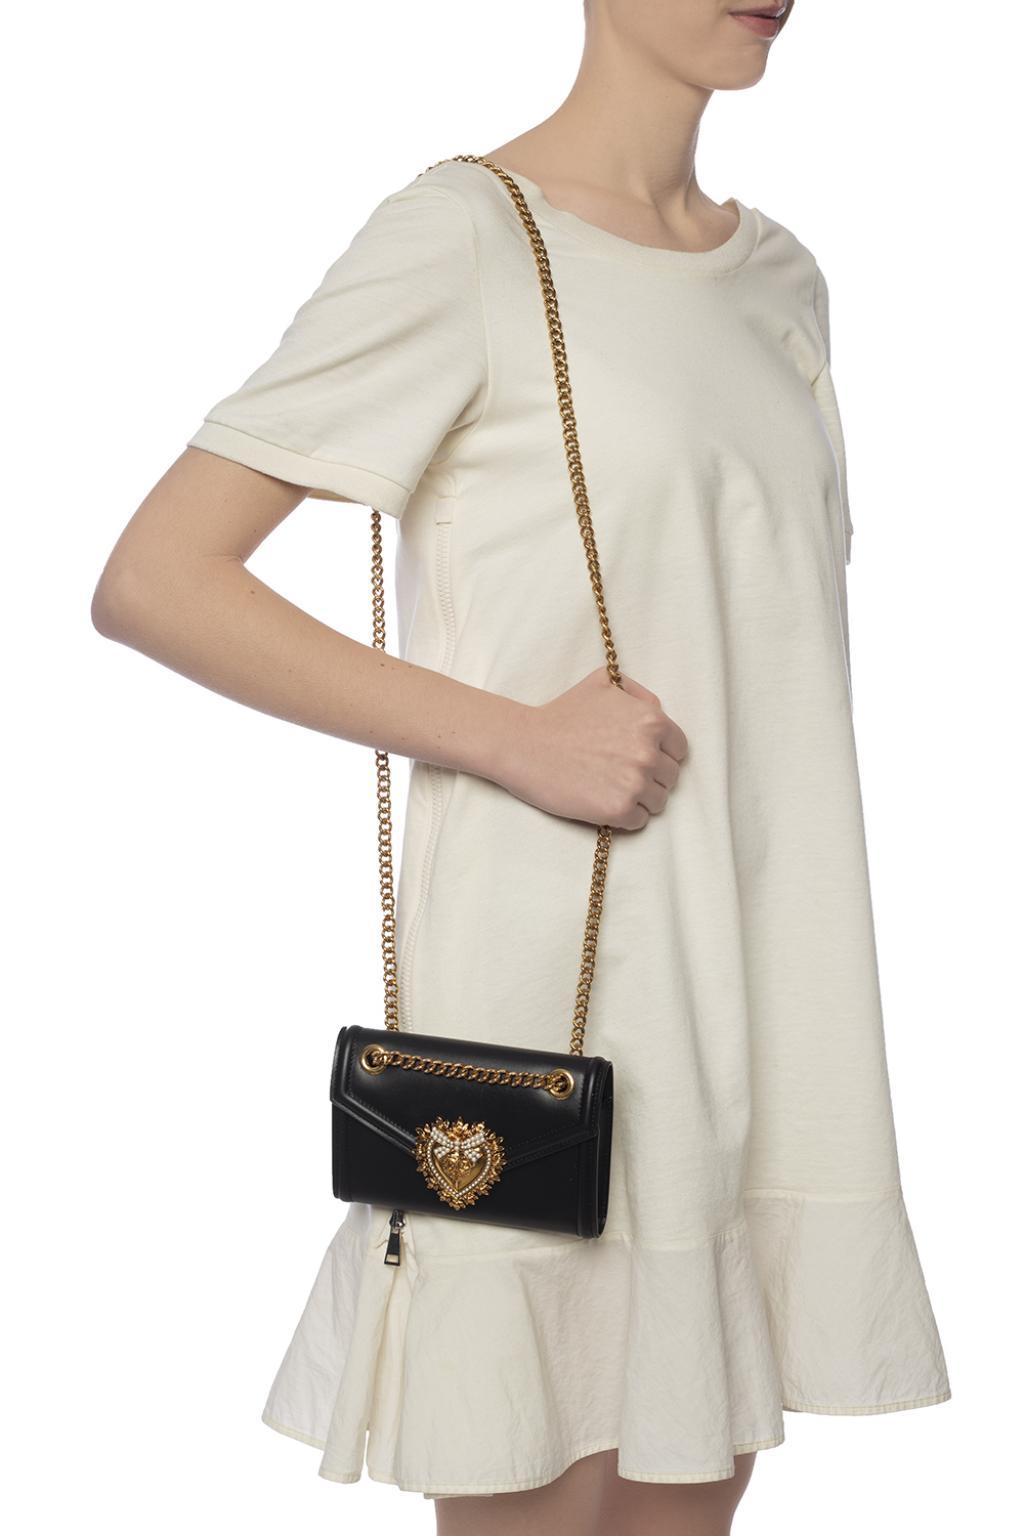 Dolce & Gabbana Calfskin Devotion Mini Bag in Black | Lyst